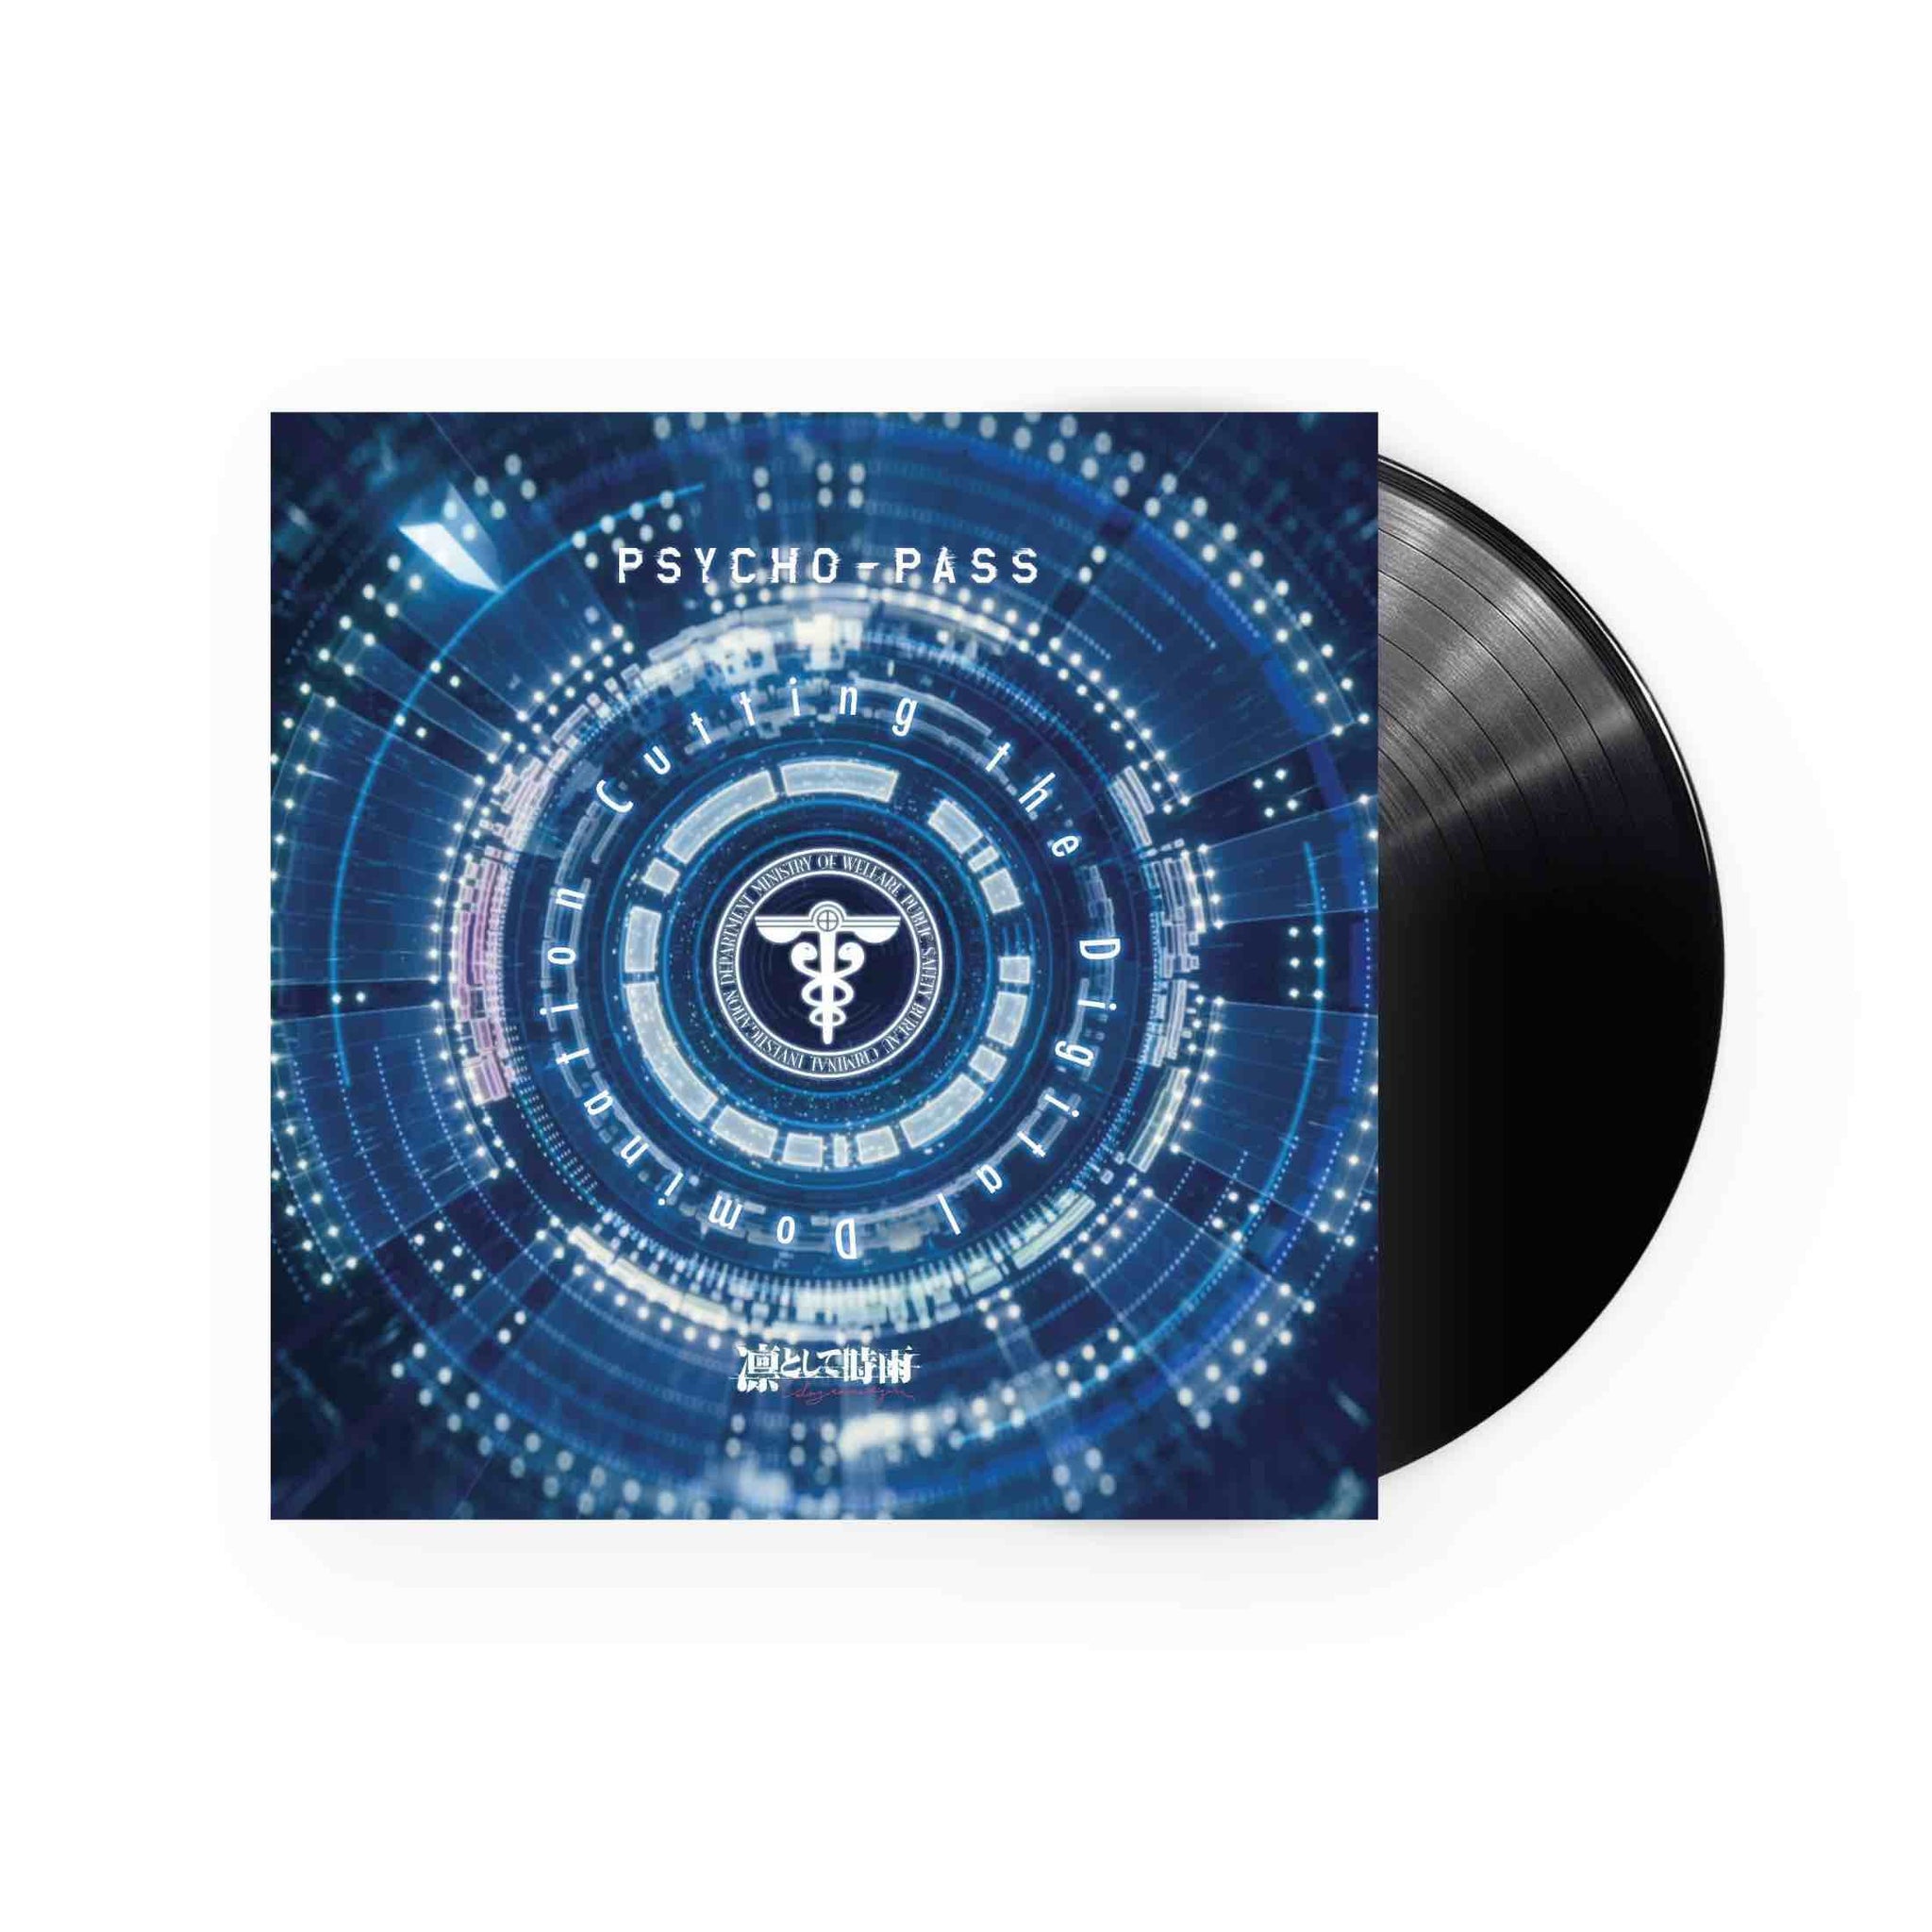 Psycho-Pass : Cutting The Digital Domination Soundtrack LP (Black Vinyl)